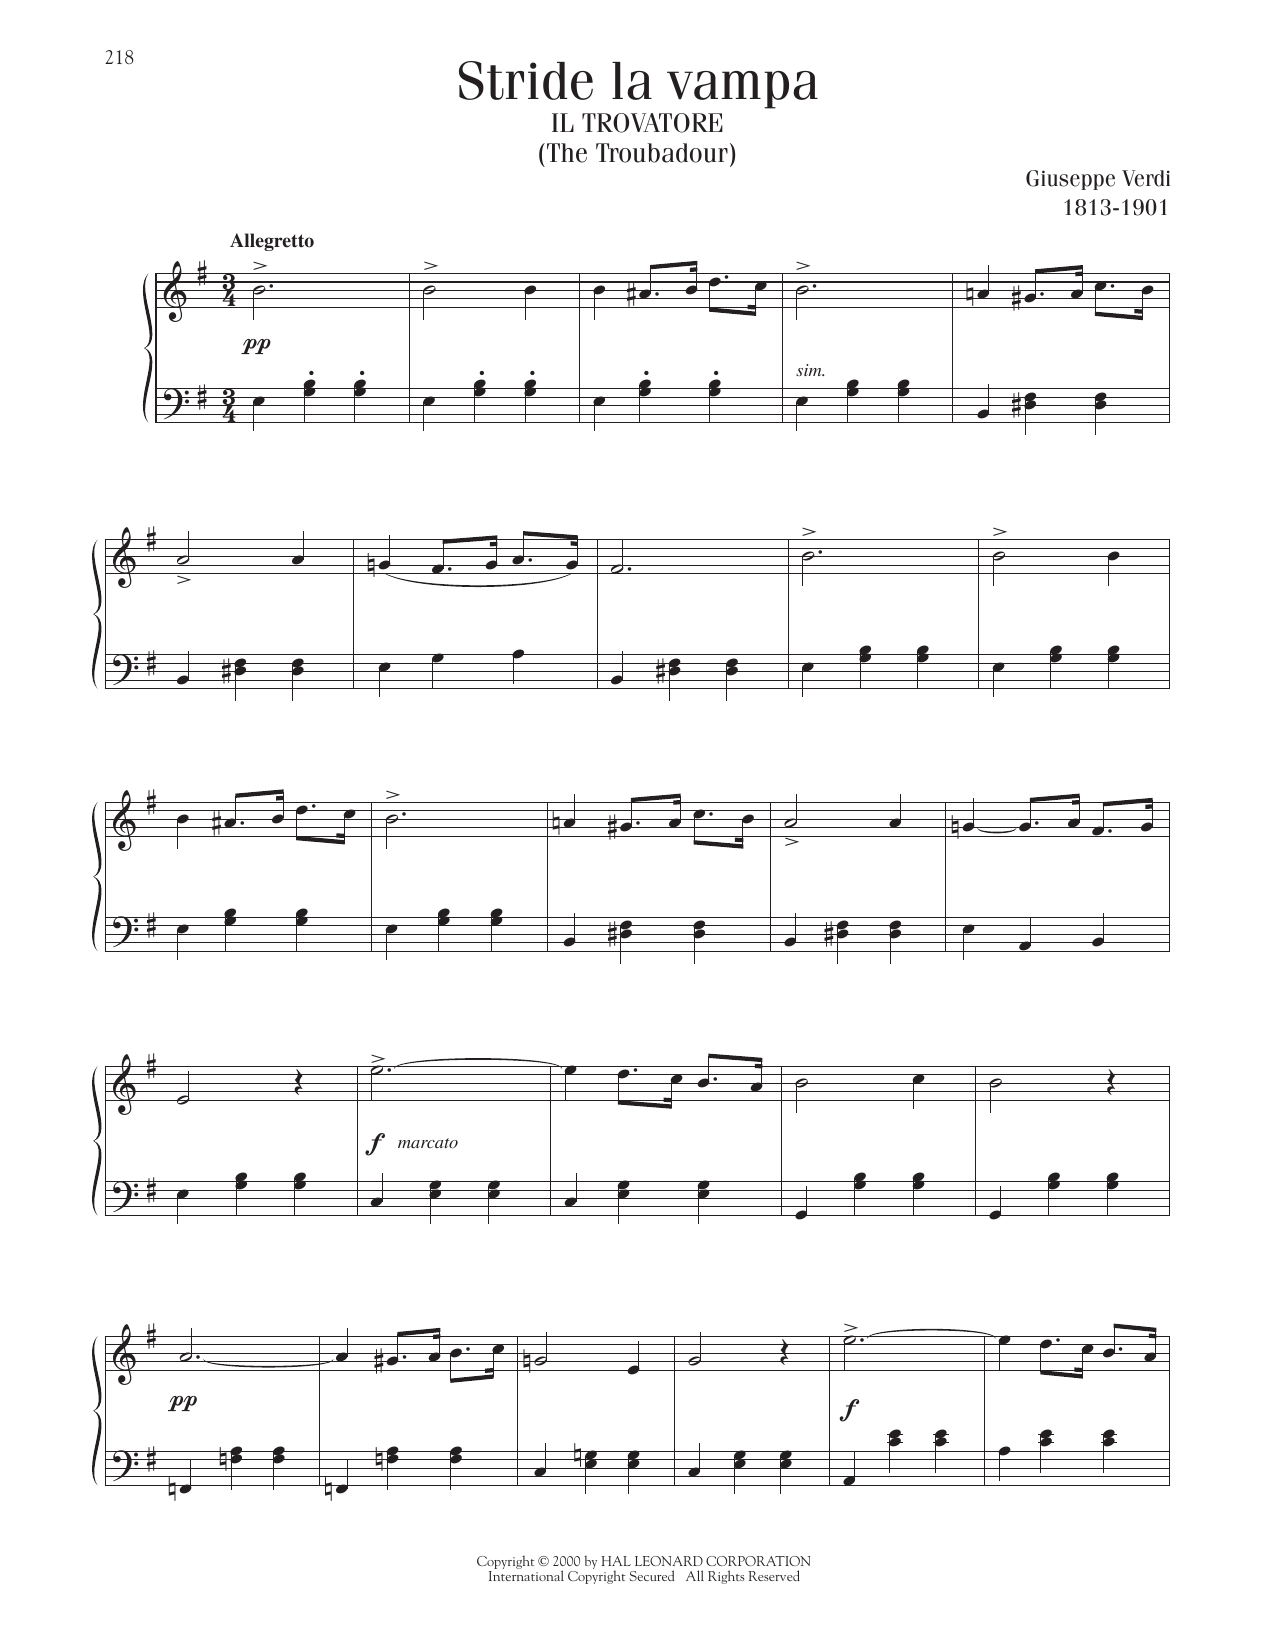 Giuseppe Verdi Stride La Vampa sheet music notes printable PDF score